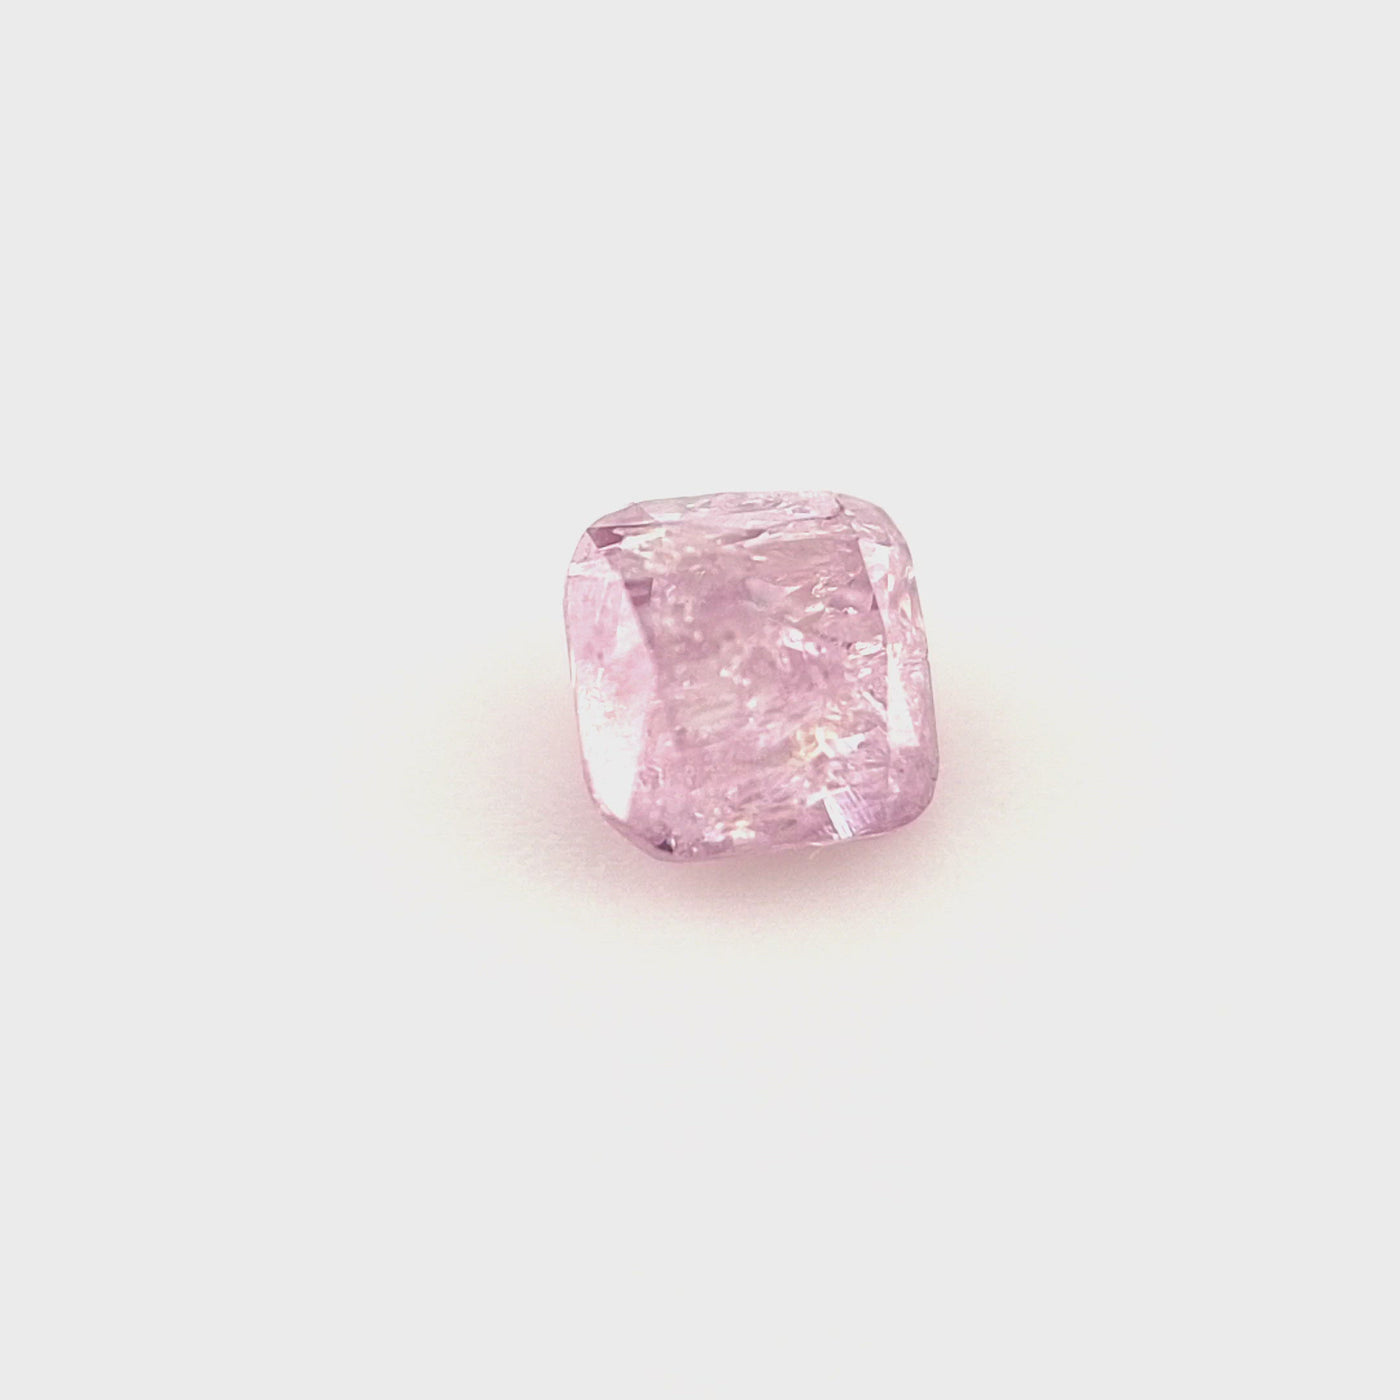 0.19ct Australian Argyle Pink Purple Snow Diamond - Cushion Cut